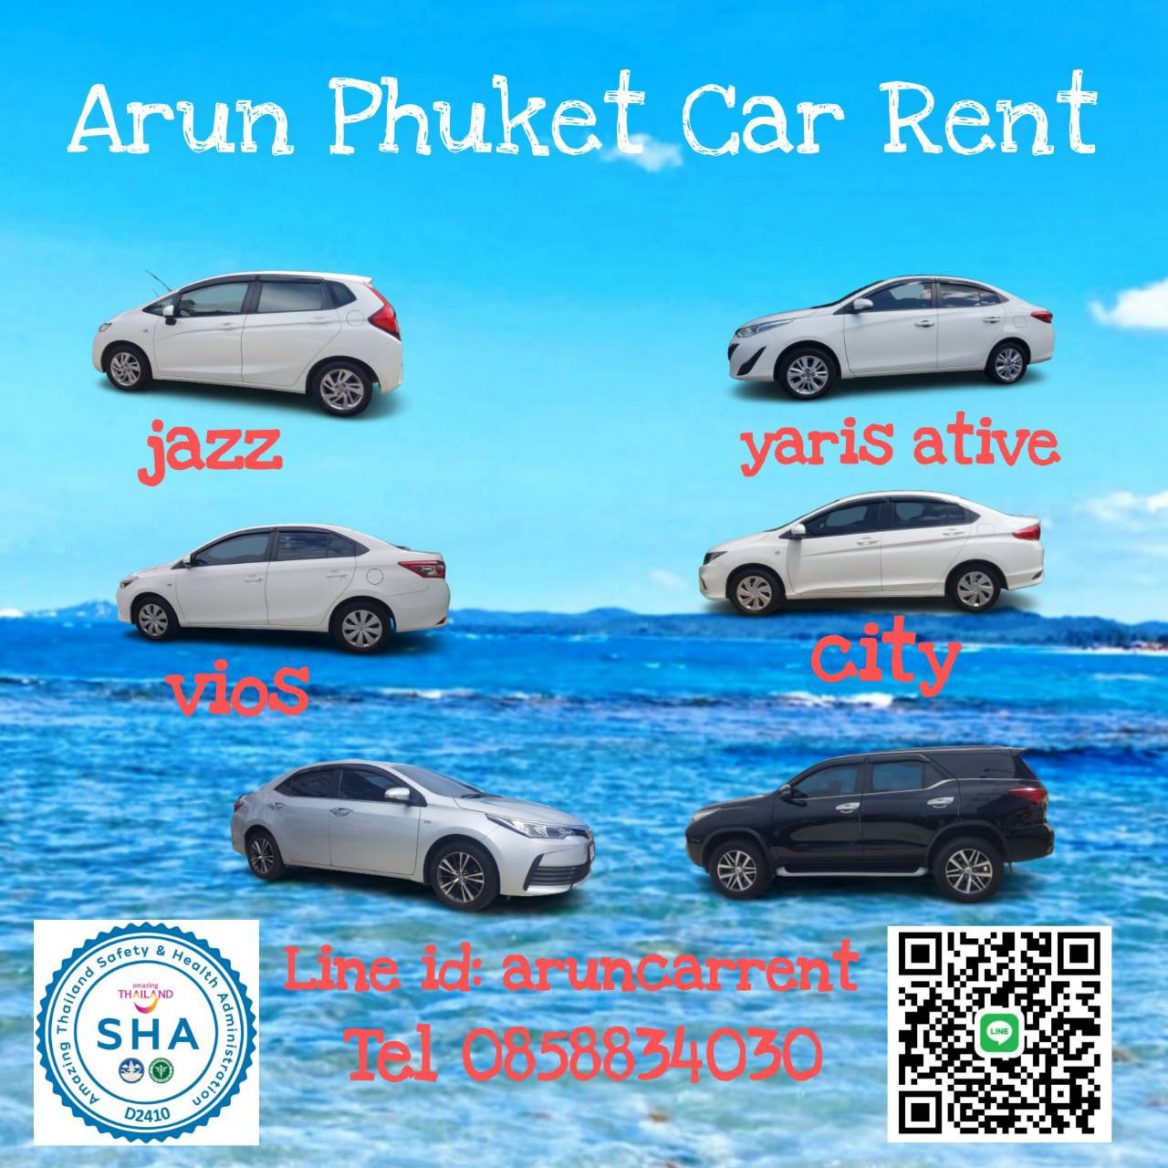 ARUN PHUKET CAR RENT SHA